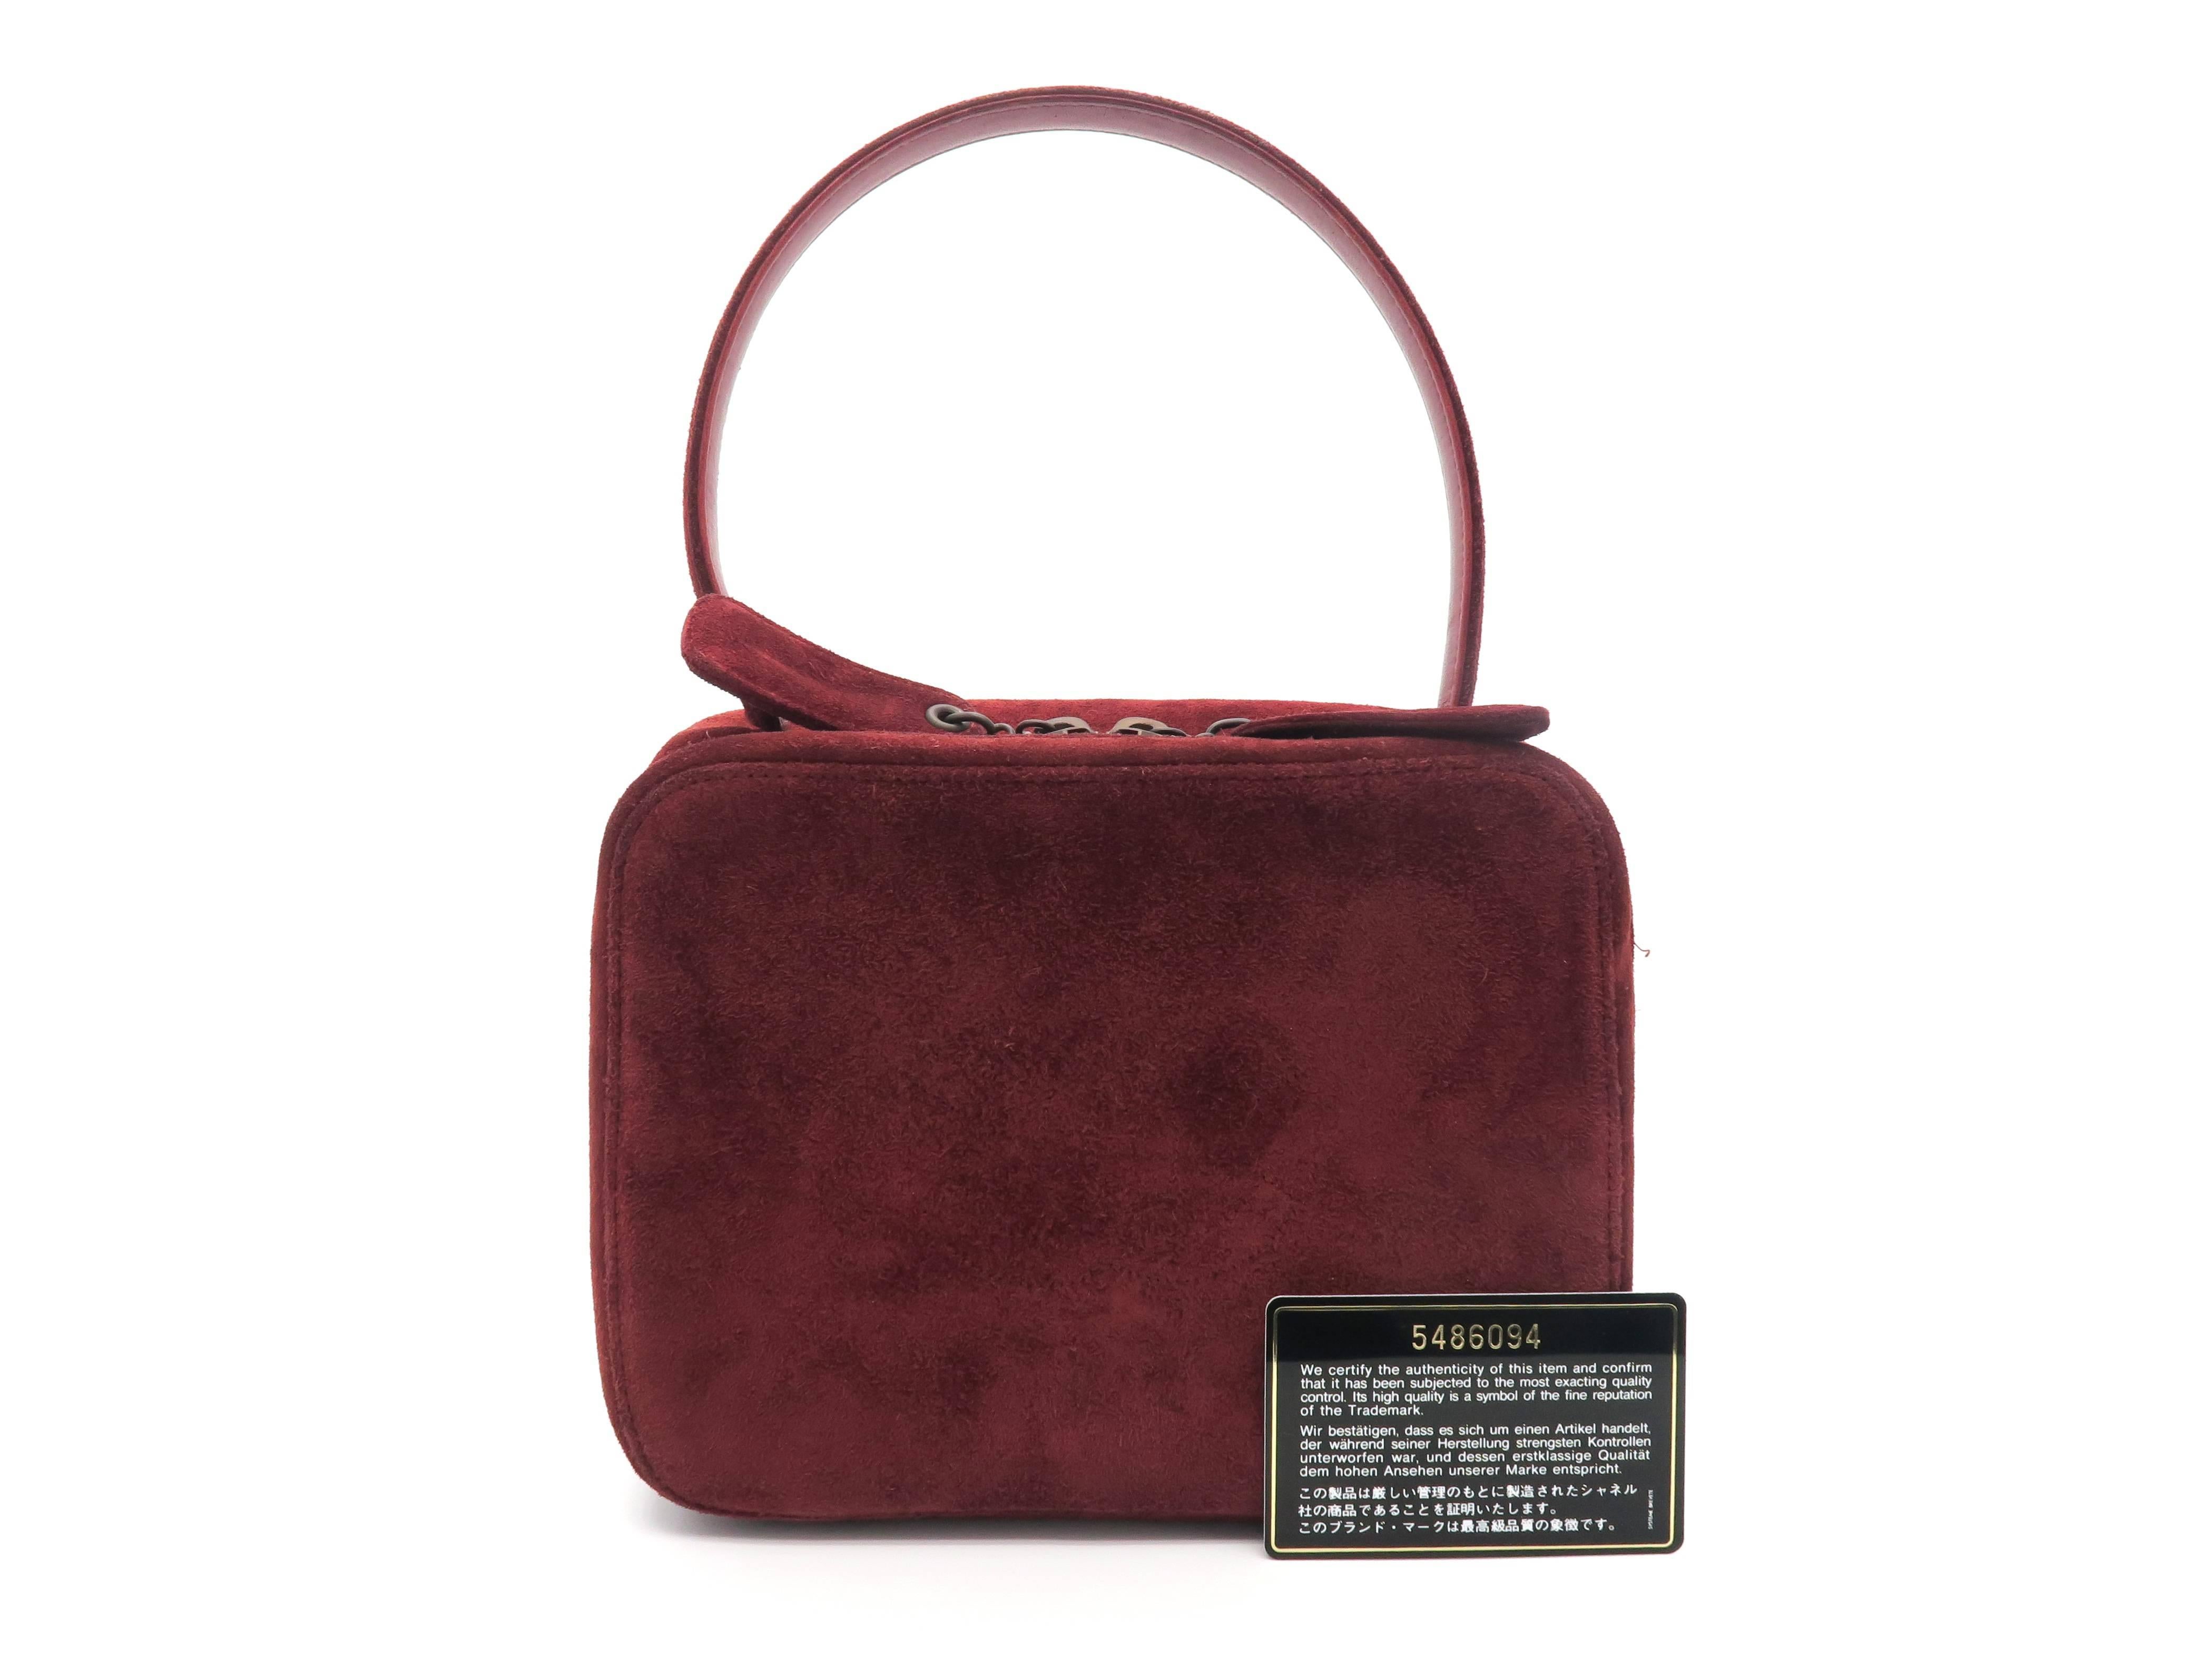 Chanel Red Suede Handbag For Sale 1